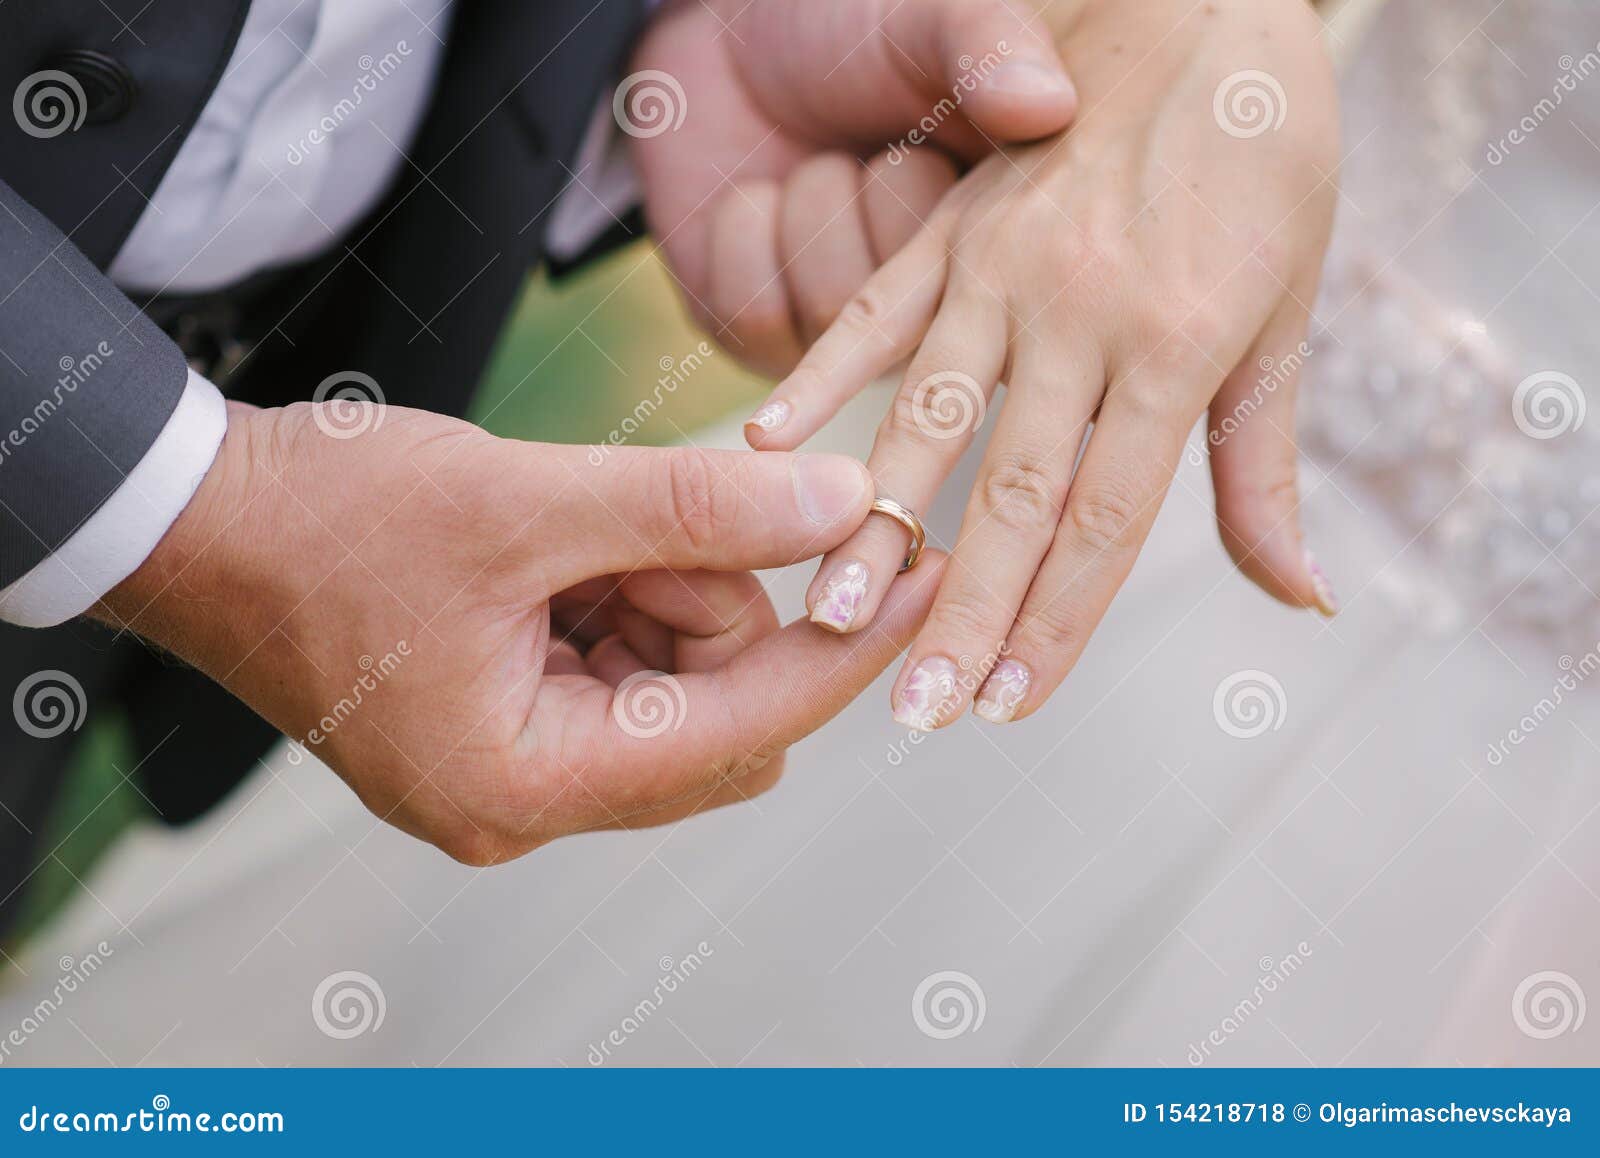 Groom Puts Finger Ring Wedding Bride Registration Marriage Close Up Hands Couple 154218718 